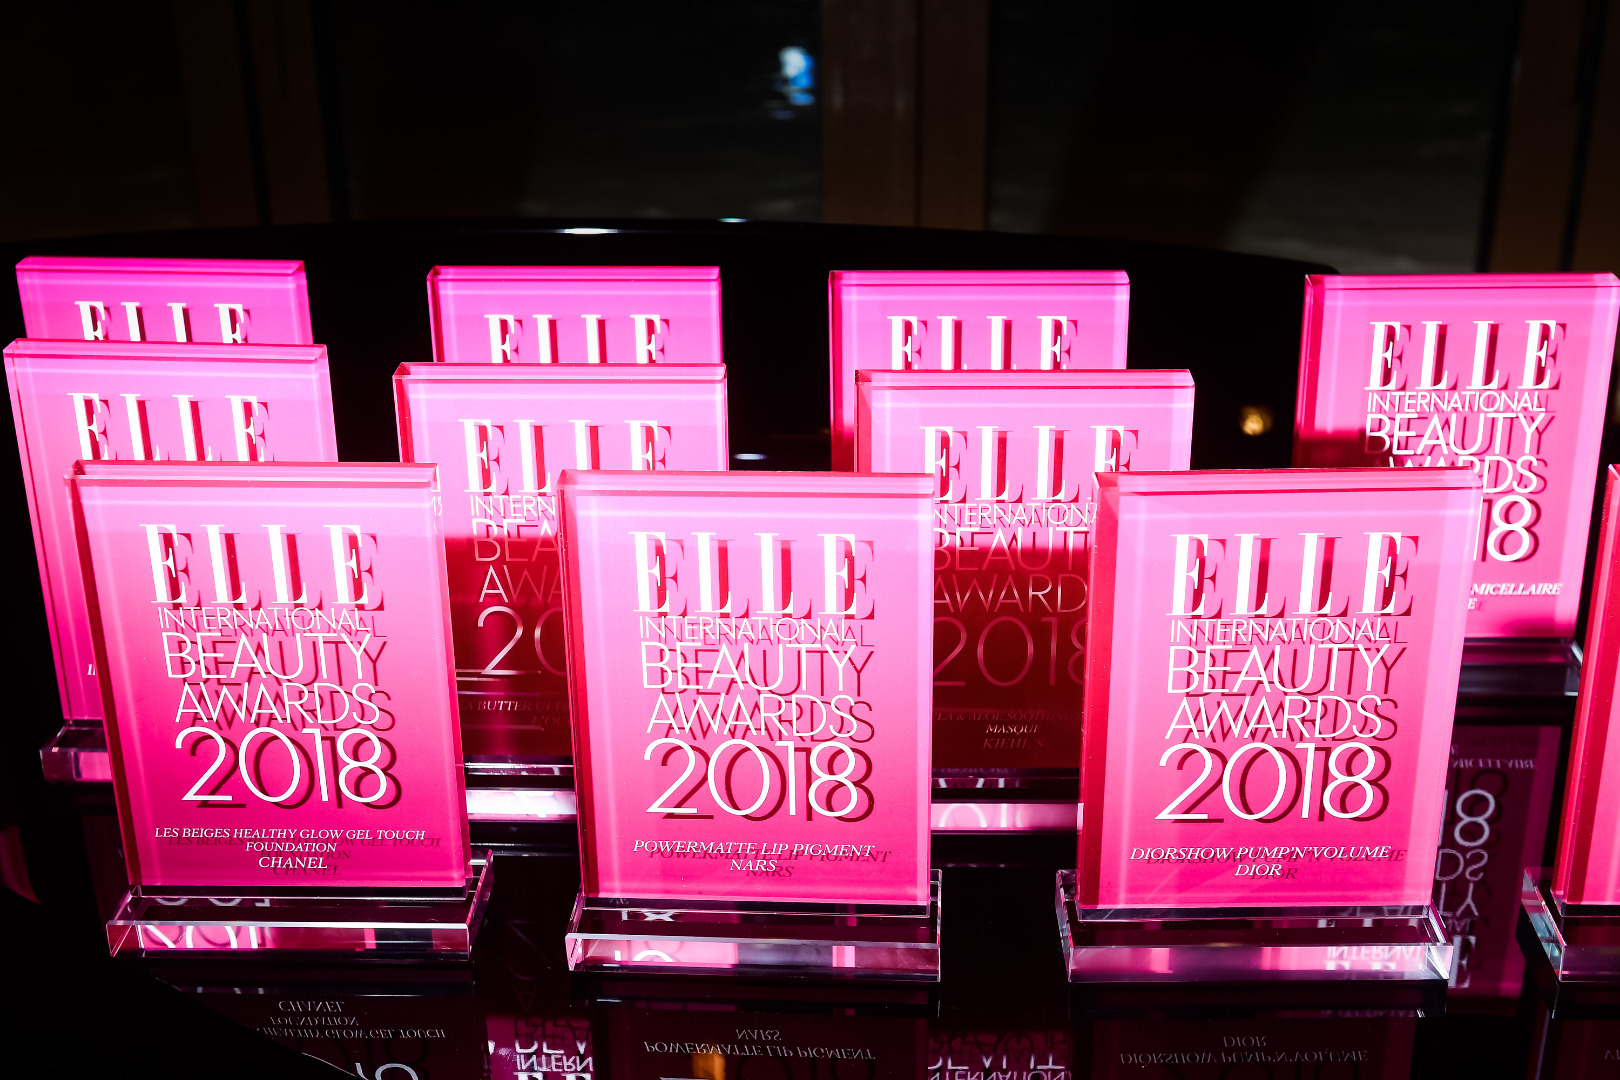  Elle Beauty International Awards: награды вручены